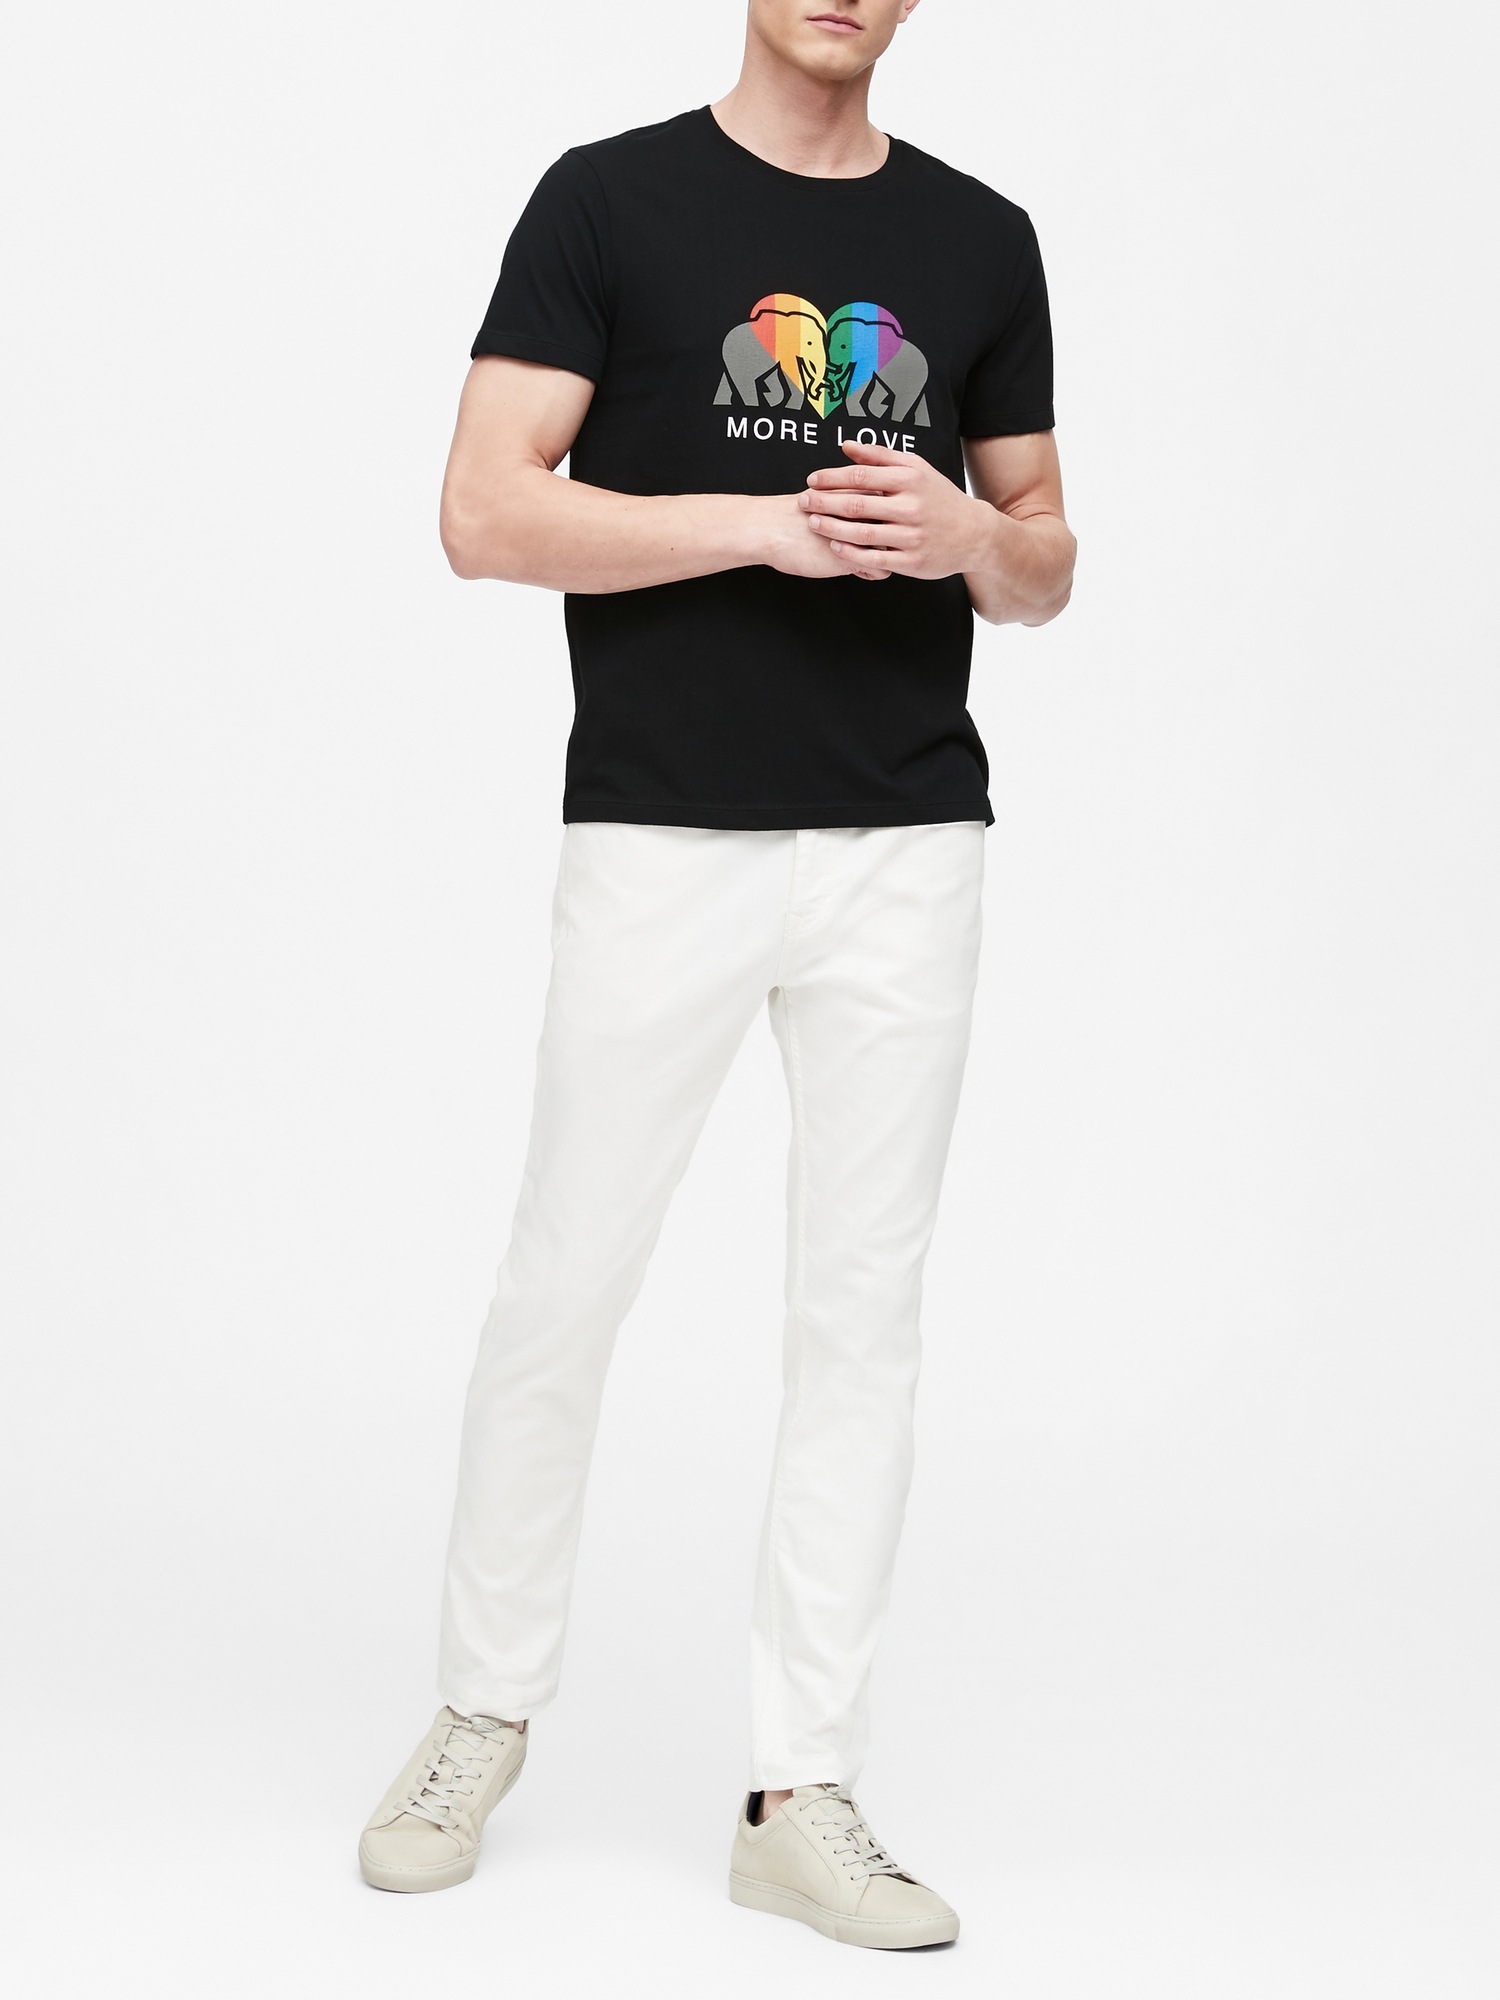 Pride 2019 Elephant T-Shirt (Men's Sizes)